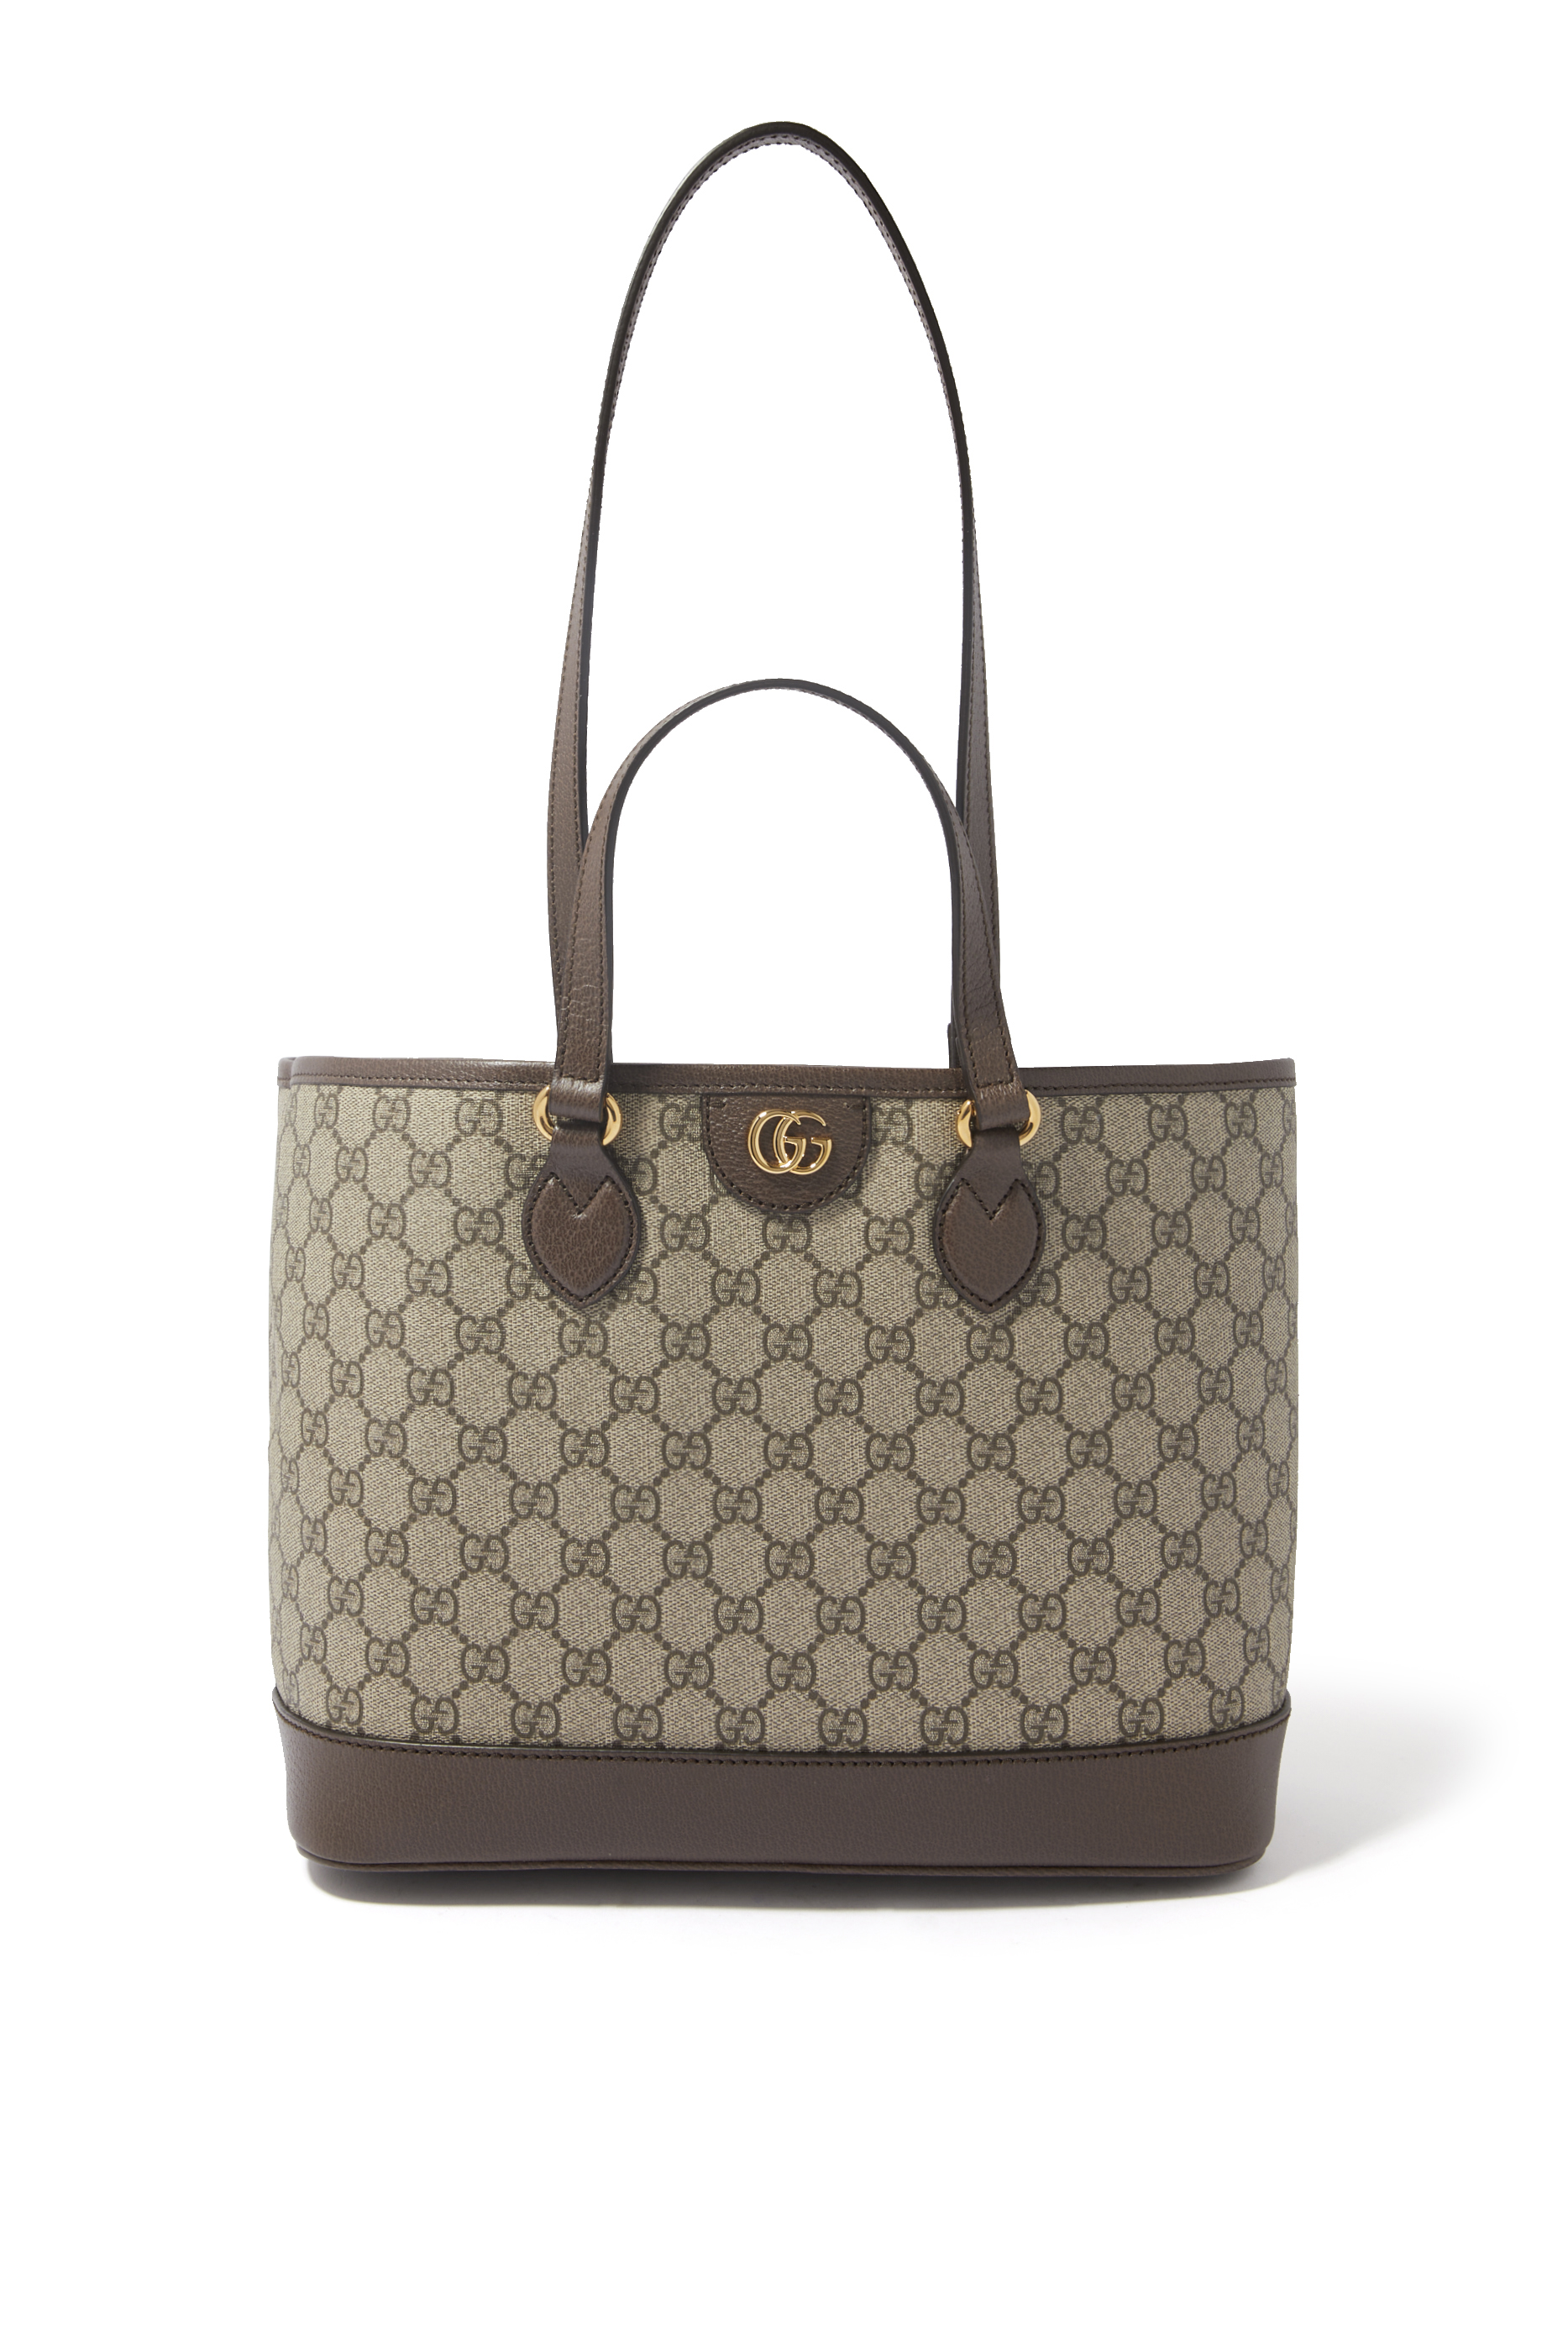 Buy Gucci Ophidia Medium Tote Bag for Womens | Bloomingdale's UAE